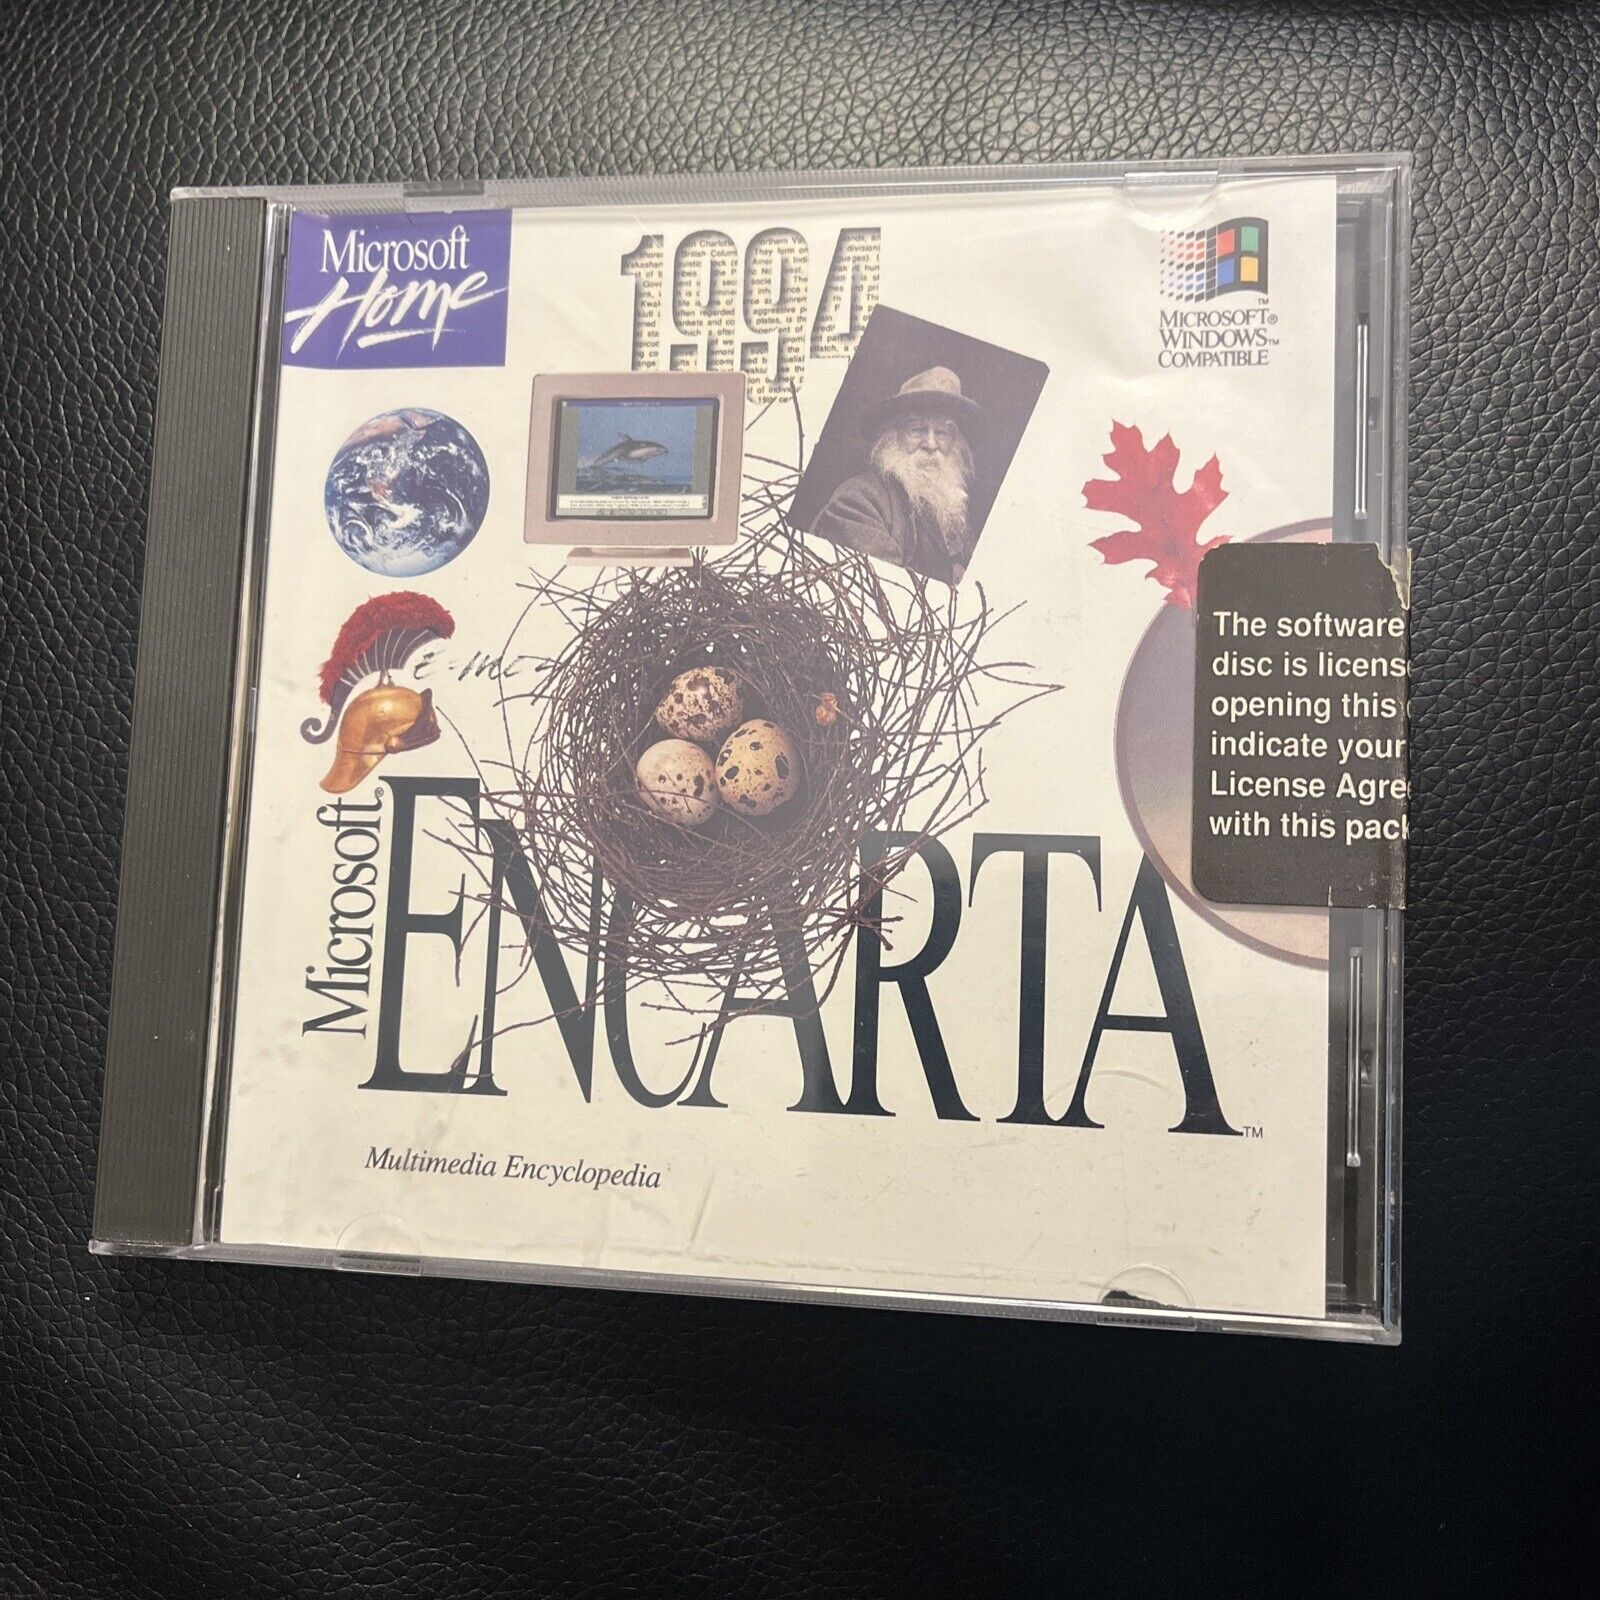 Microsoft Home - Encarta Multimedia Encyclopedia CD-ROM, 1994 Edition